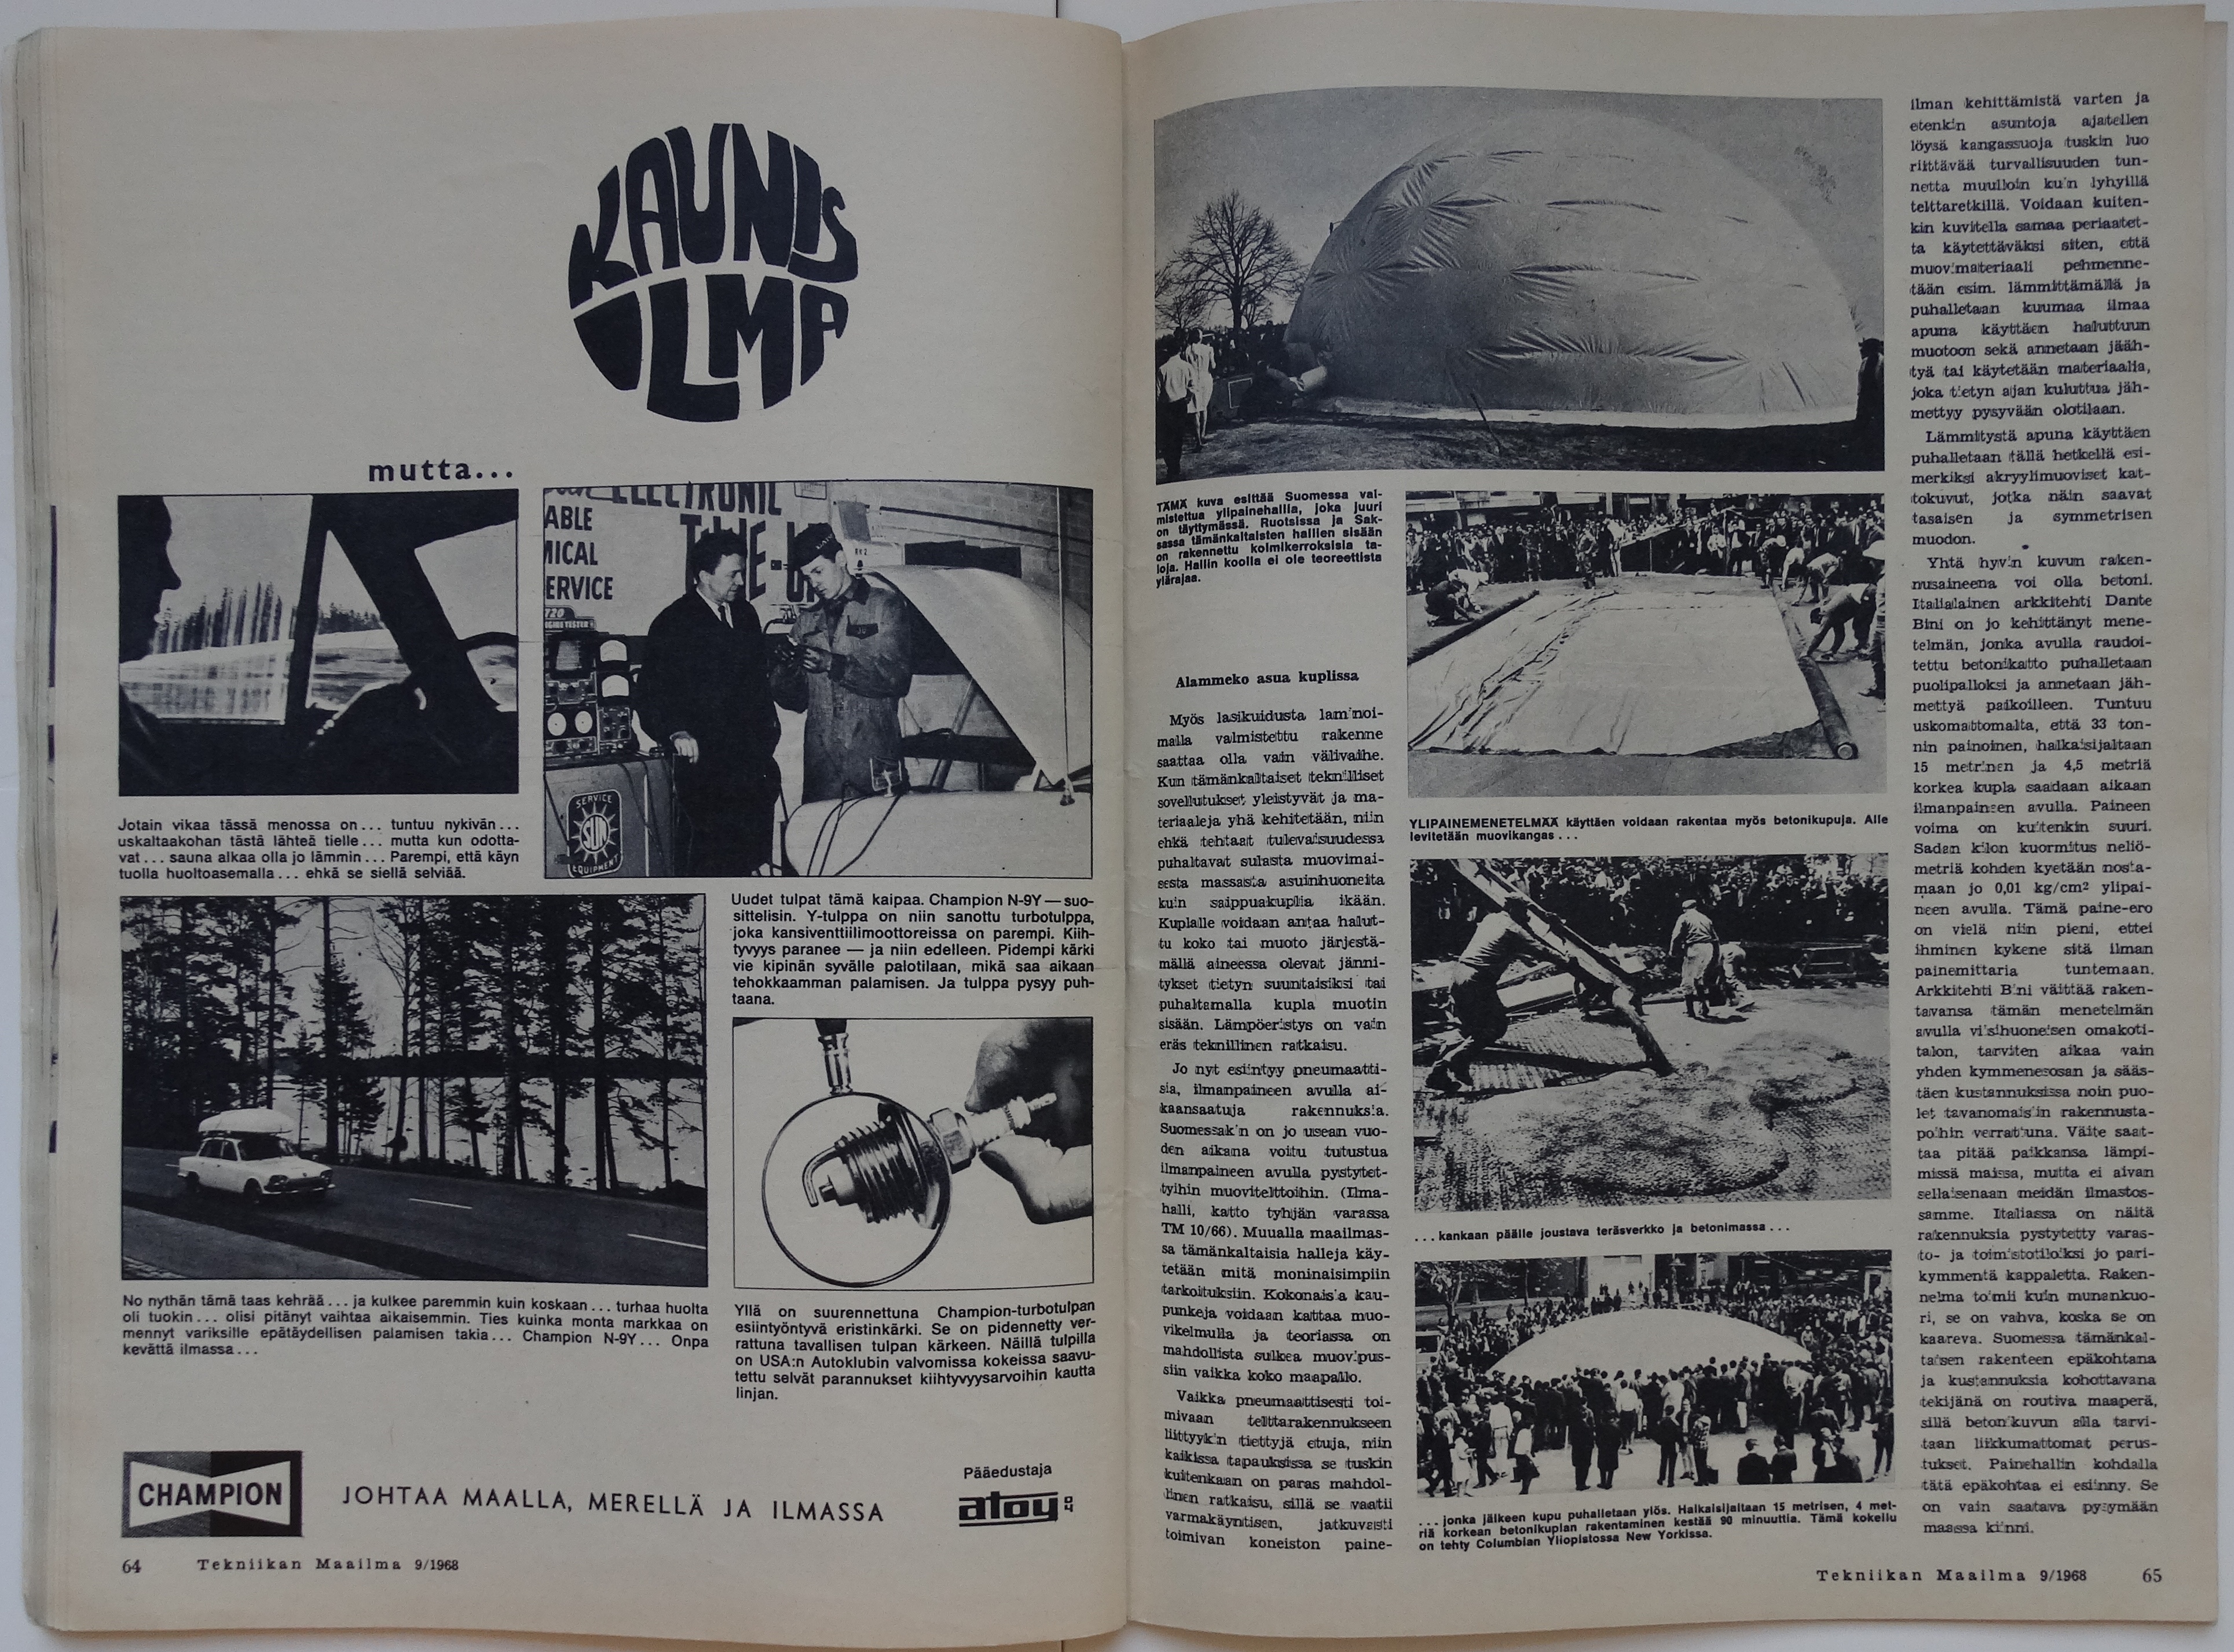 Tekniikan Maailma September 1968 | Pages 64-65